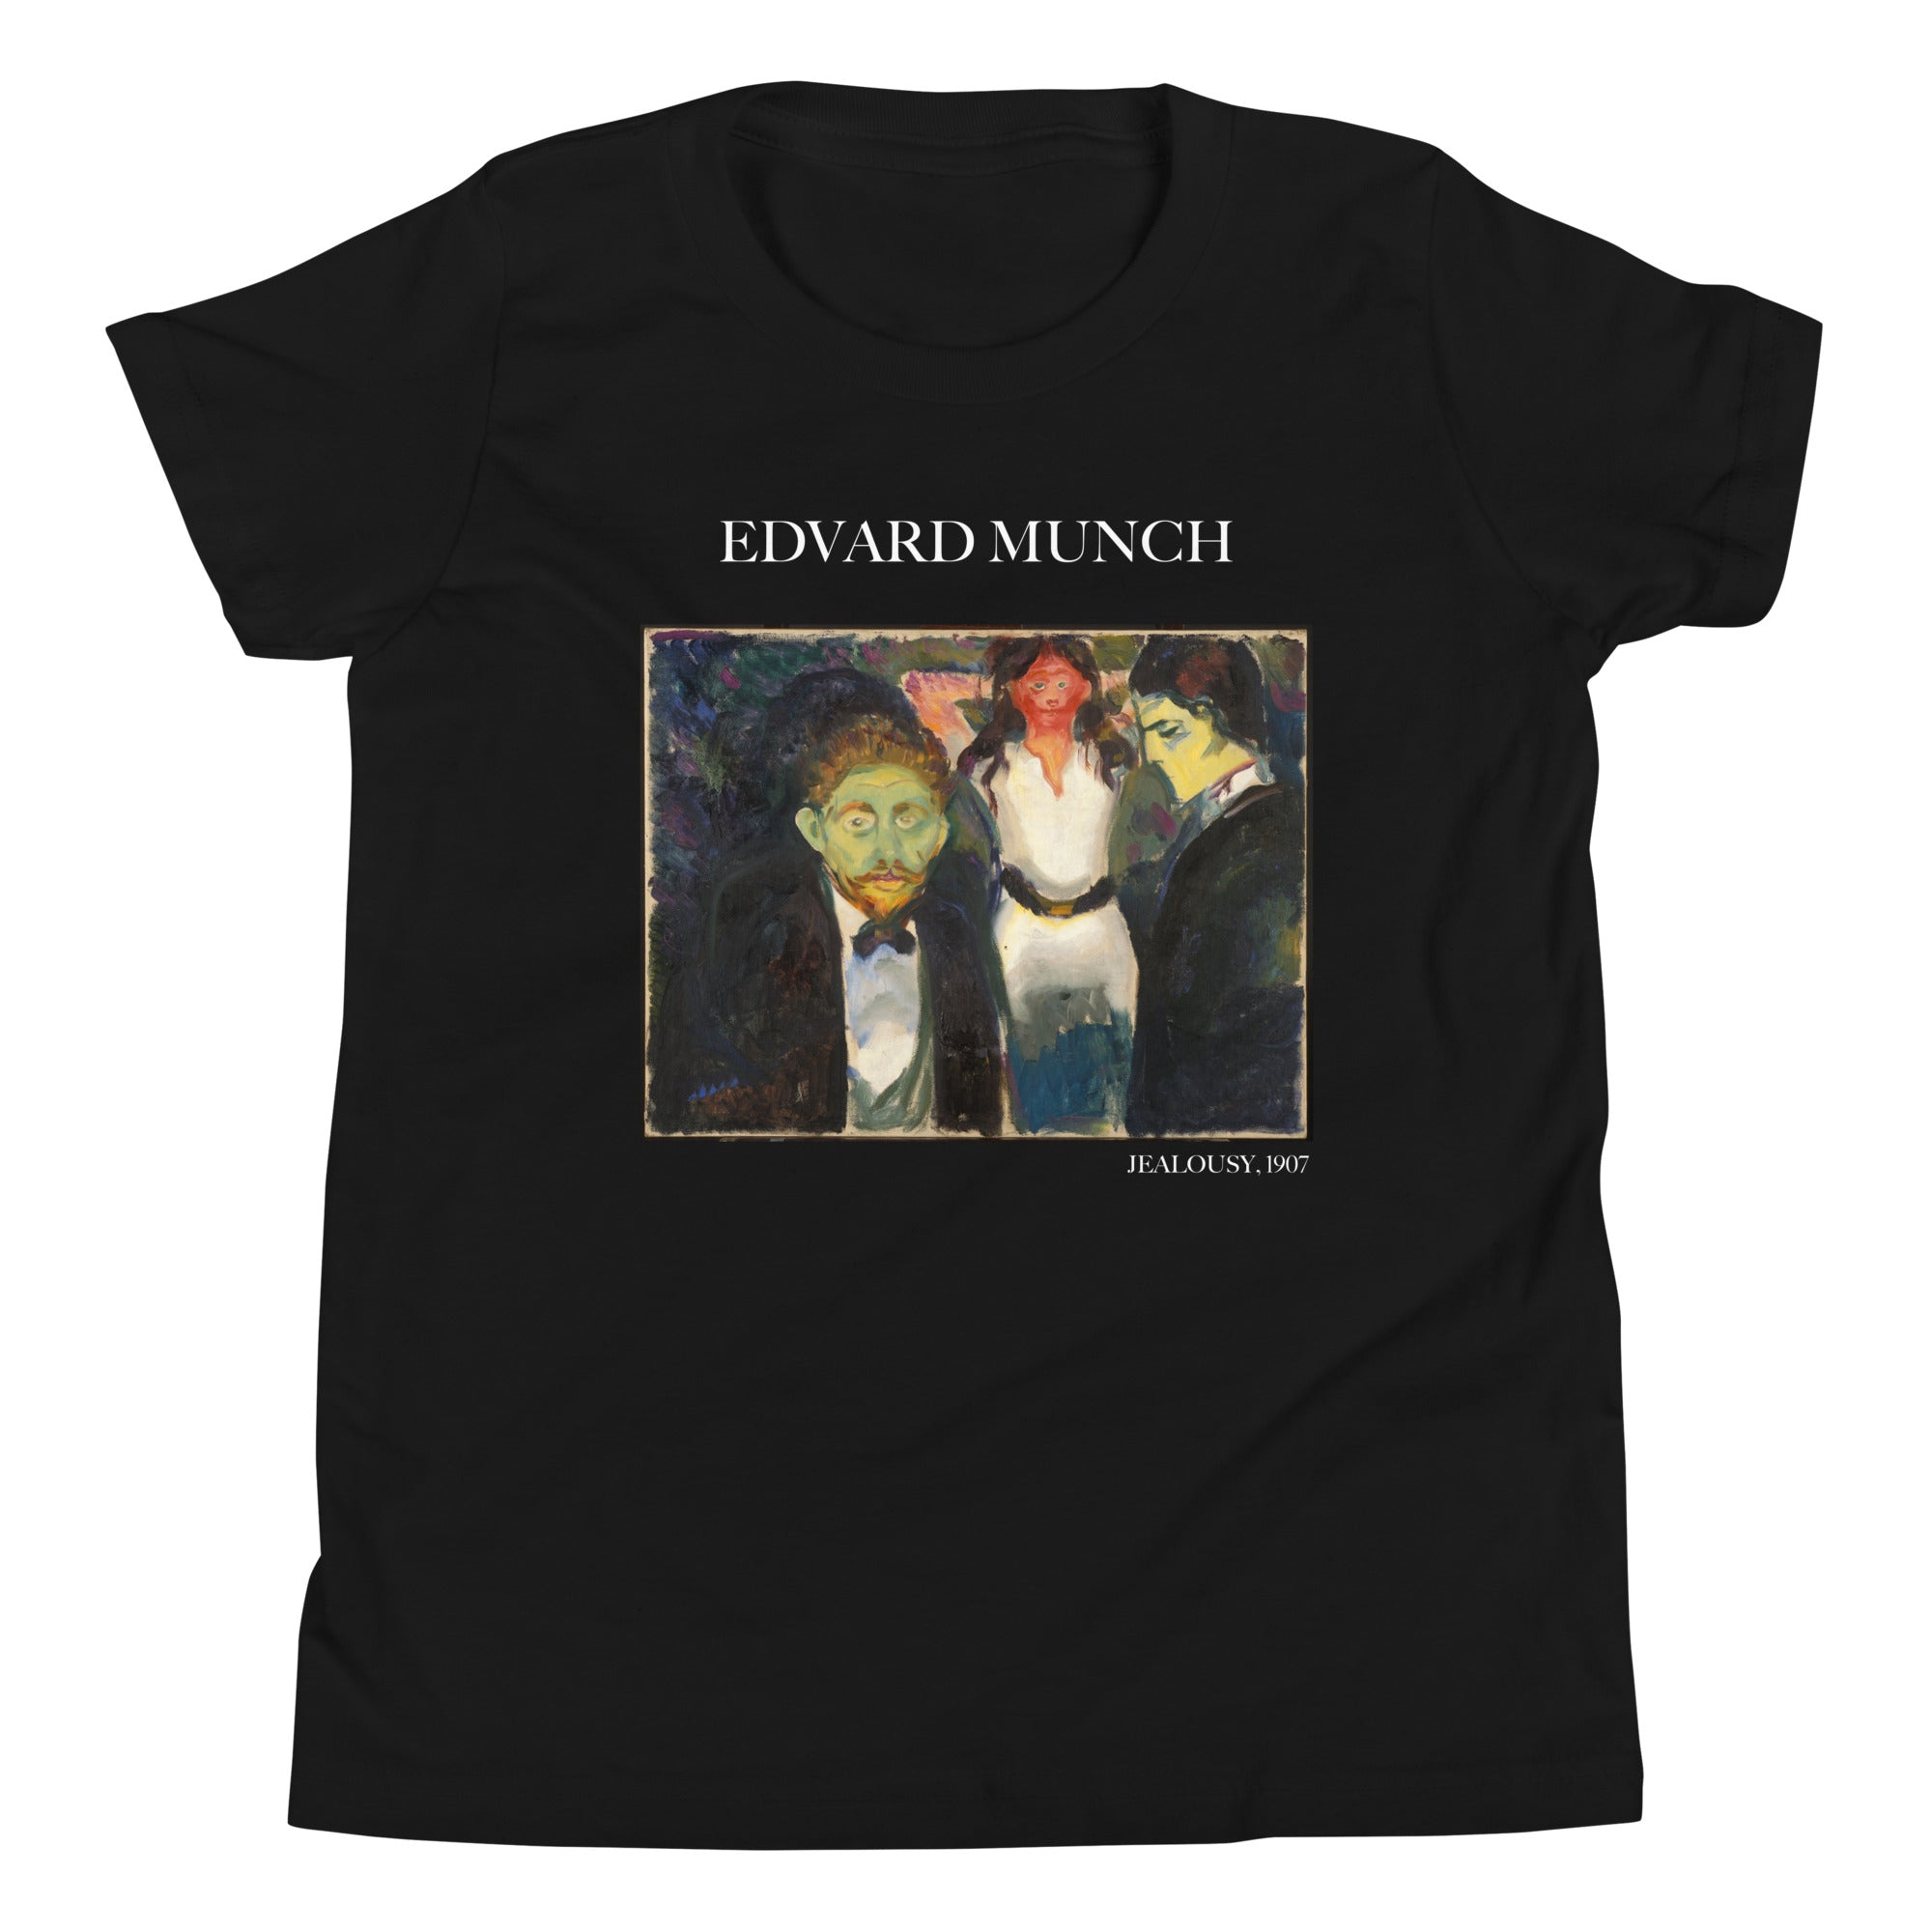 Edvard Munch 'Jealousy' Famous Painting Short Sleeve T-Shirt | Premium Youth Art Tee